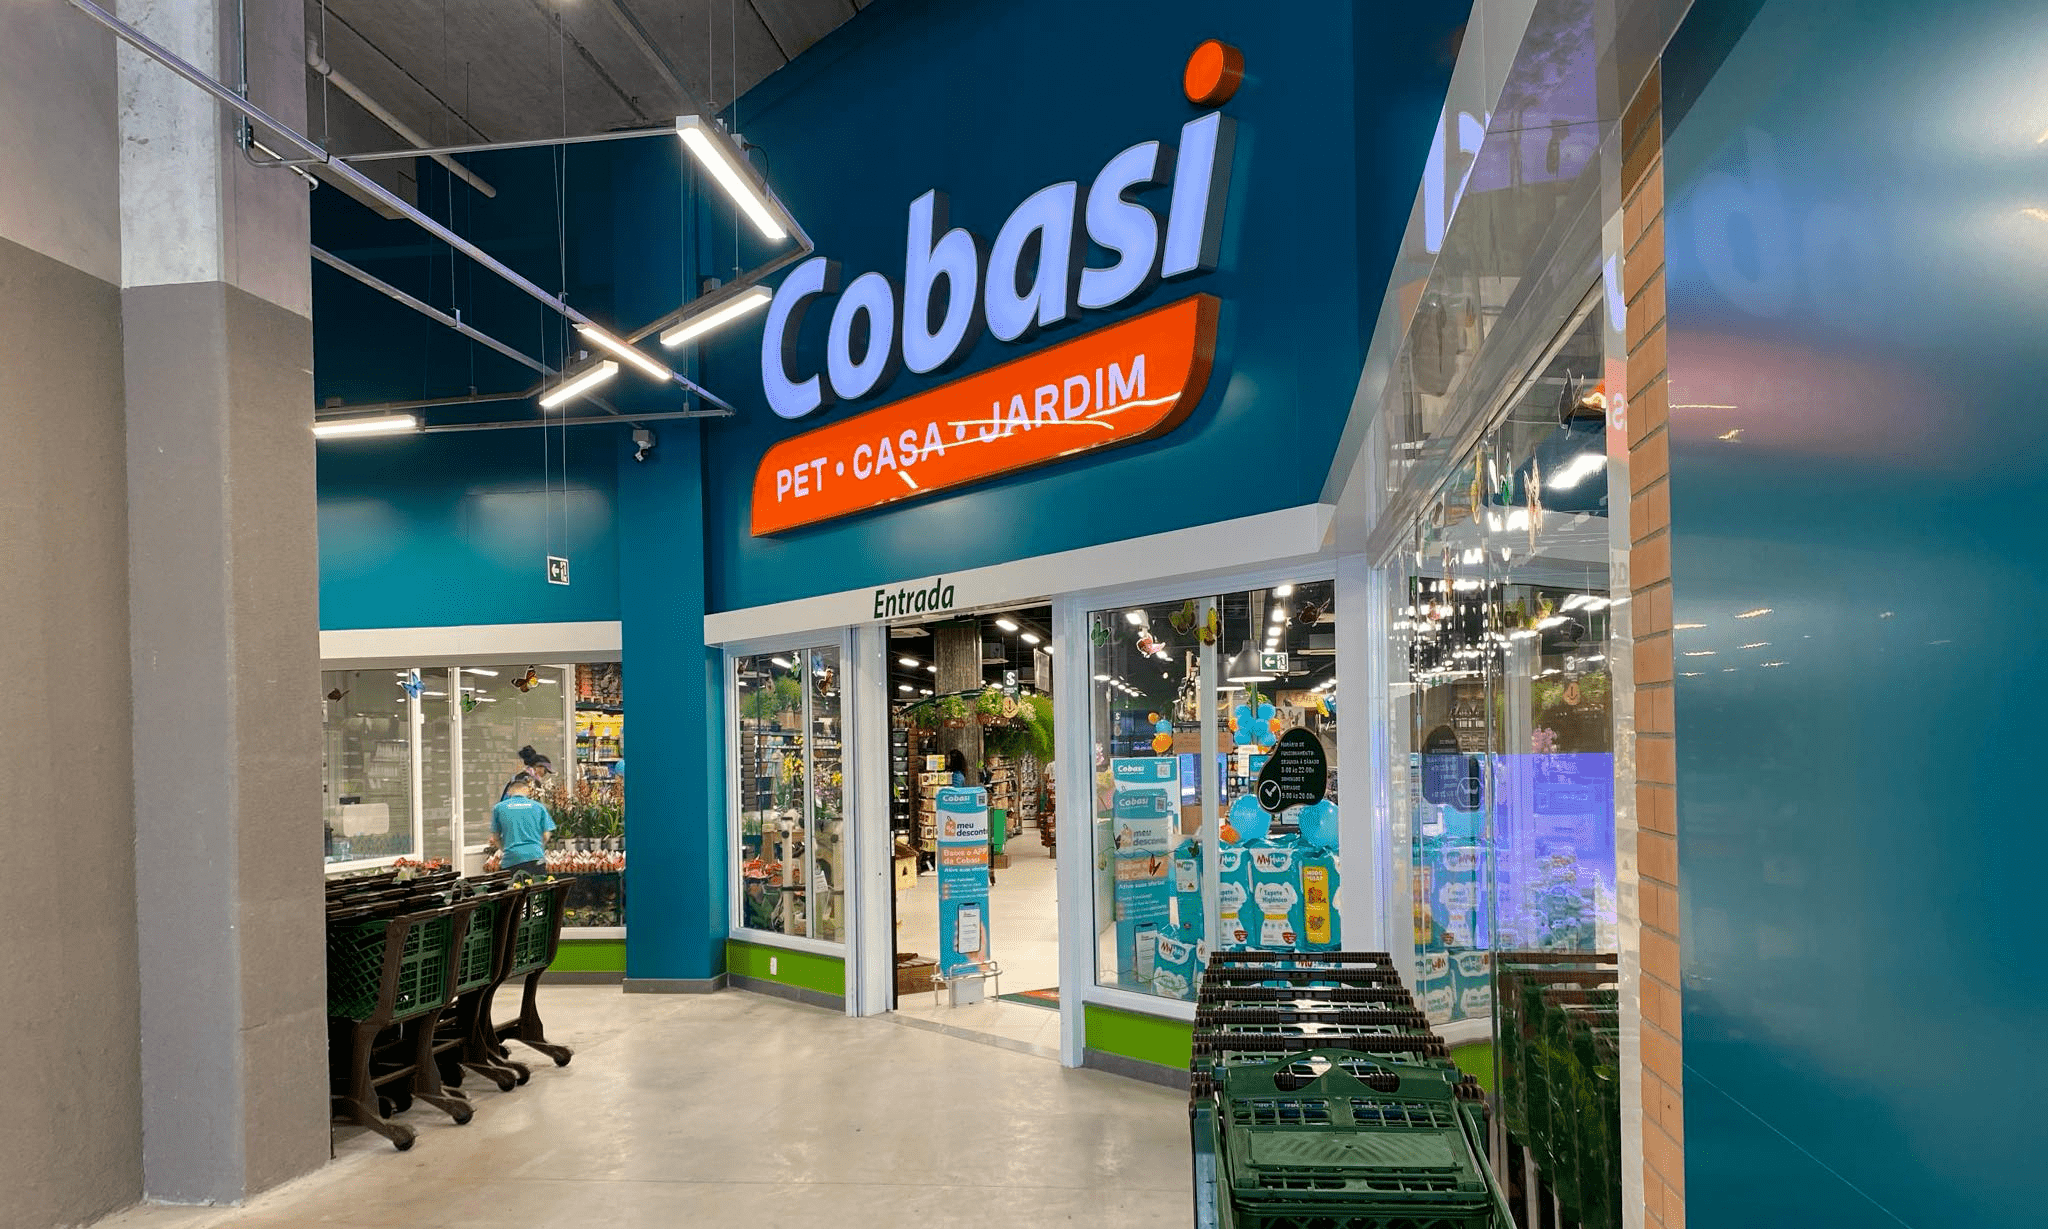 A pet shop perto de mim é a Cobasi - Blog da Cobasi